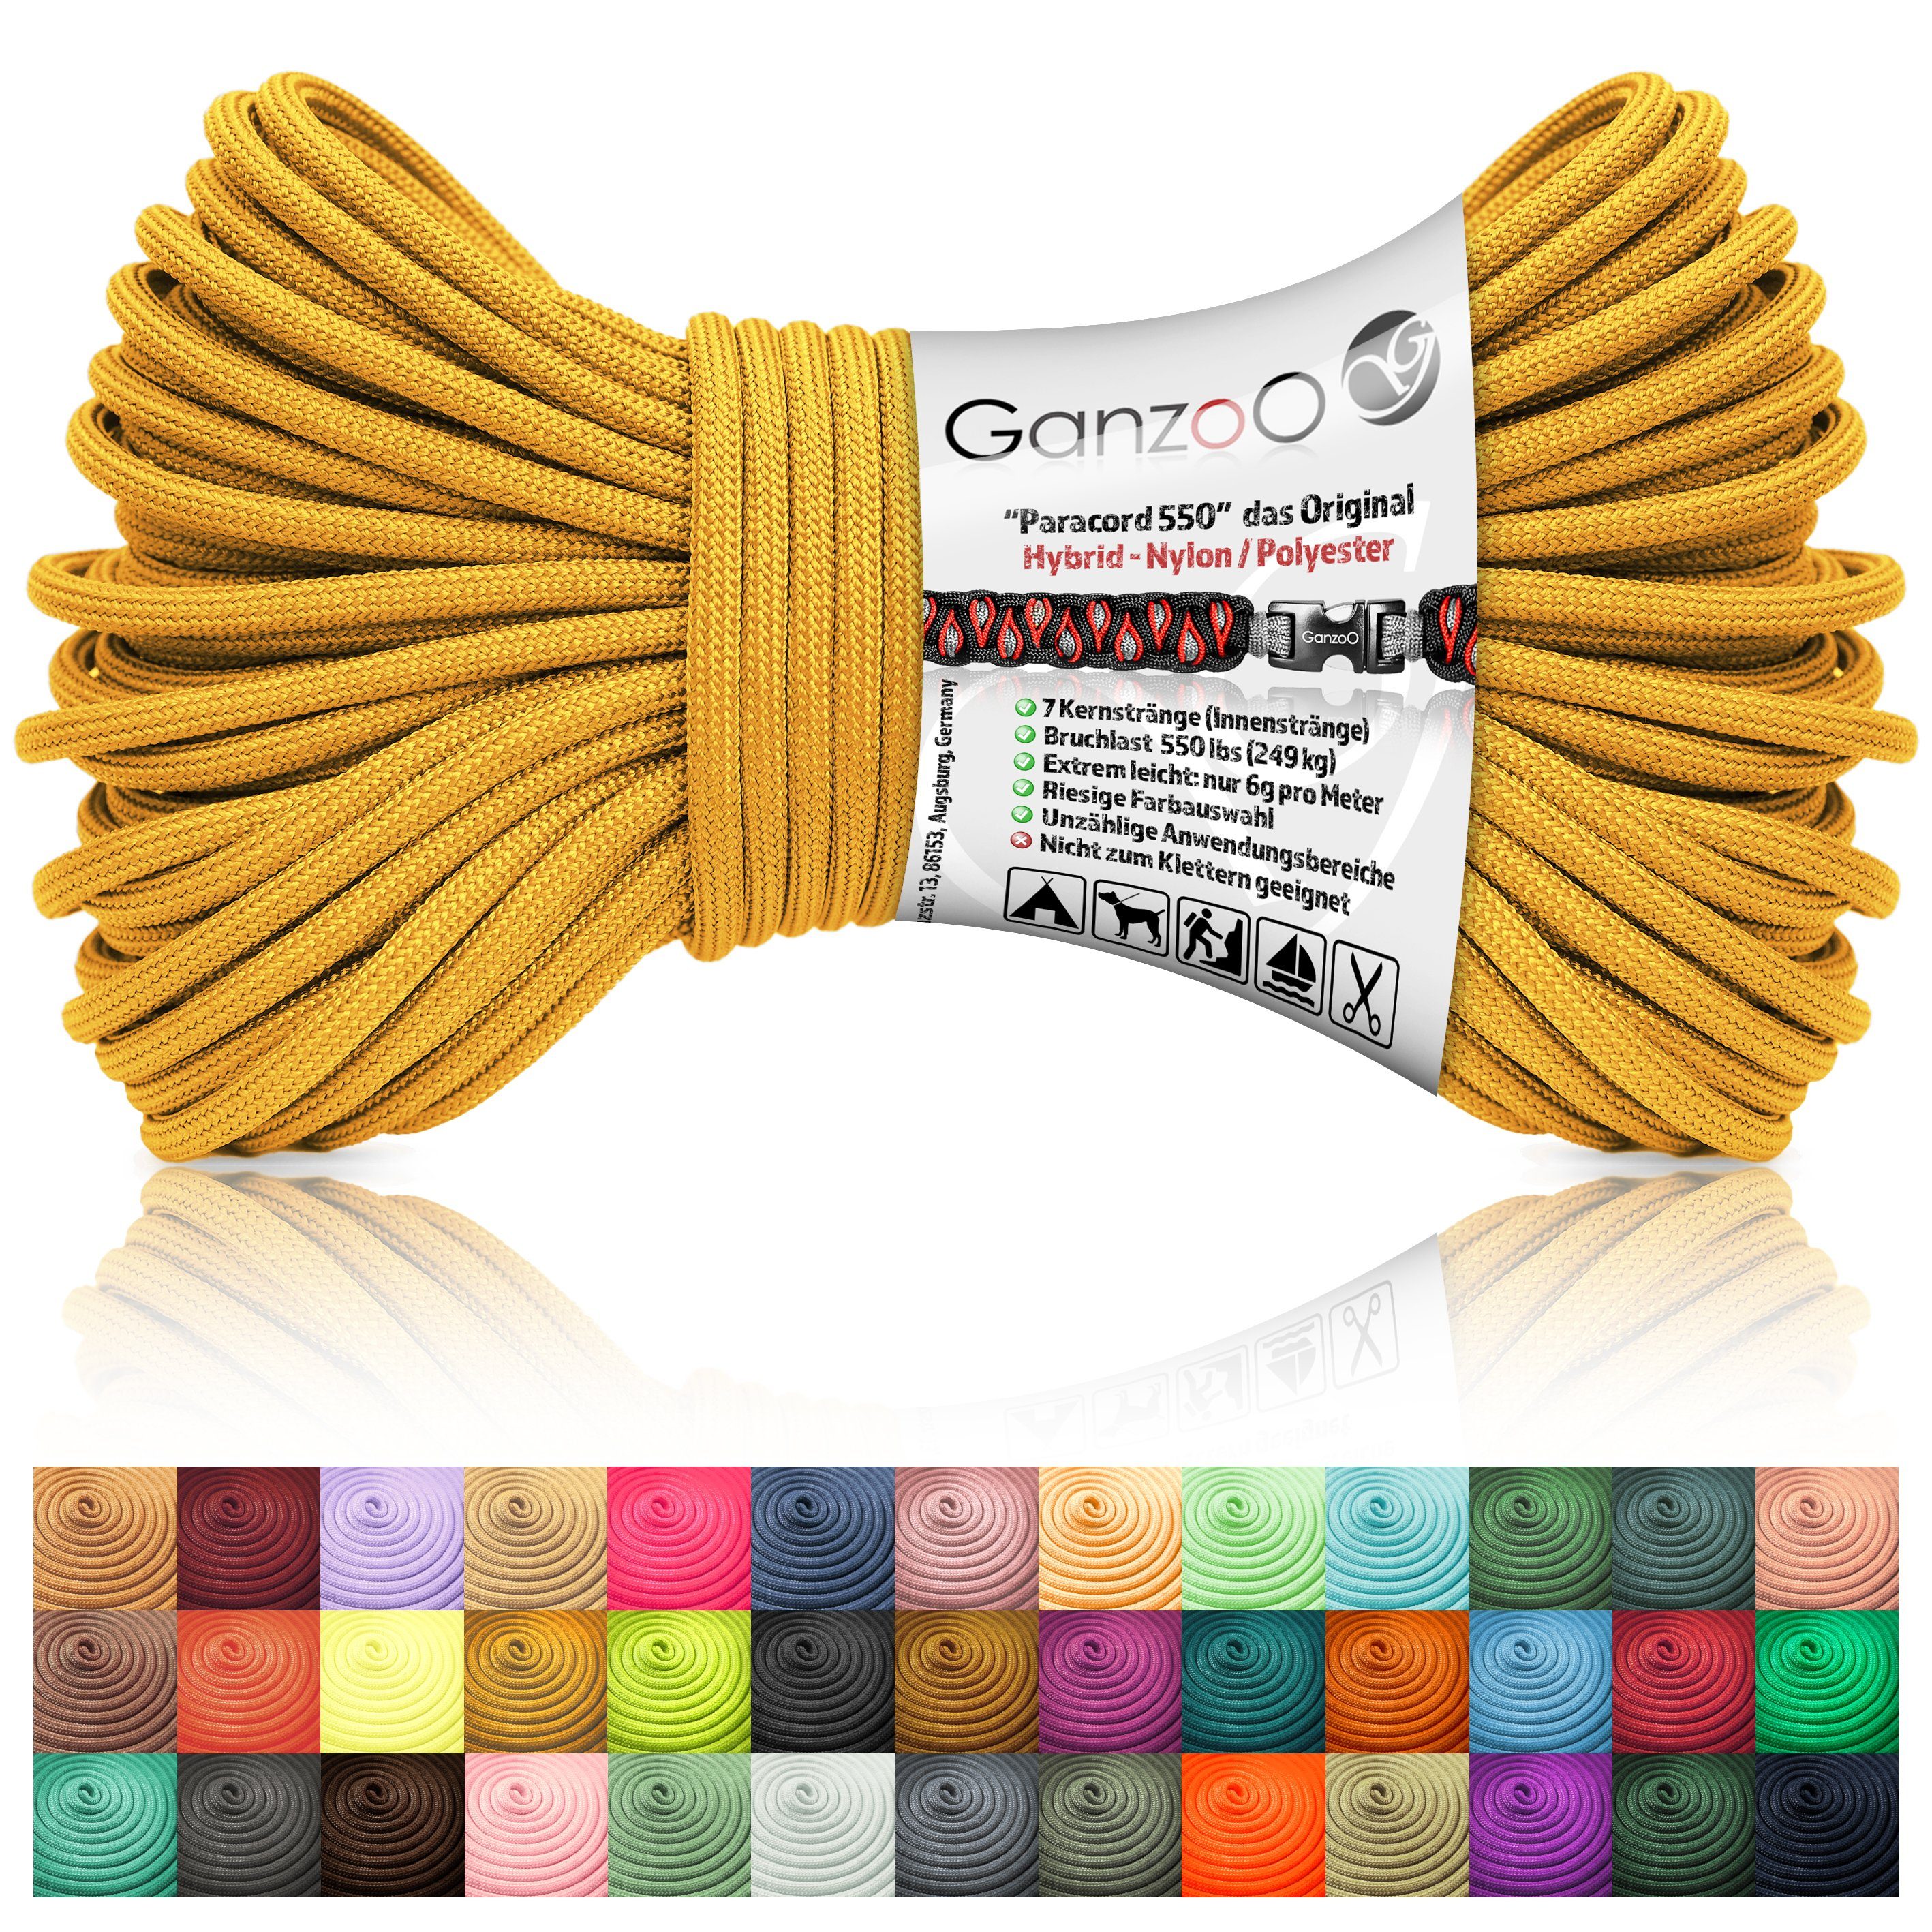 Ganzoo Paracord 550 Seil Gold-Gelb/Typ Hybrid für Armband, Leine, Halsband Seil